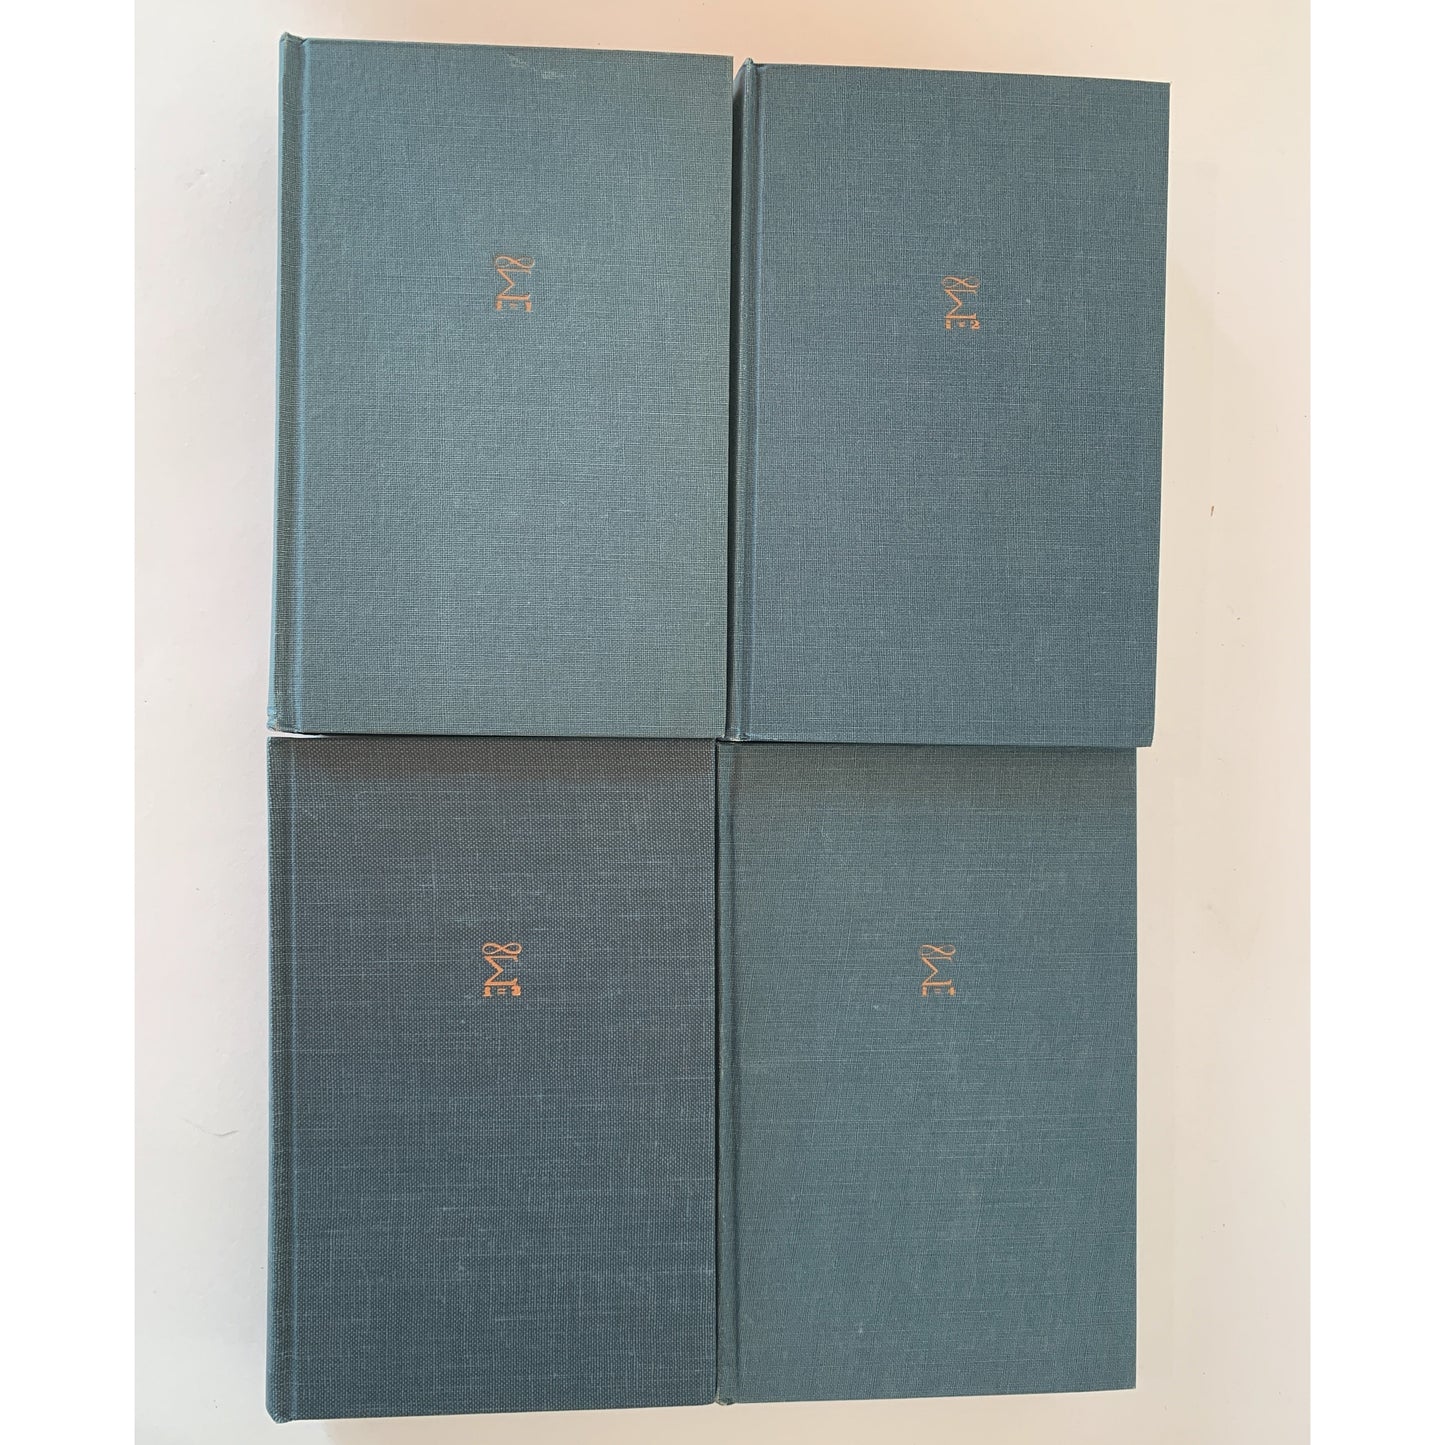 The World of Mathematics Boxed Set 1956, Blue Mid Century Book Set